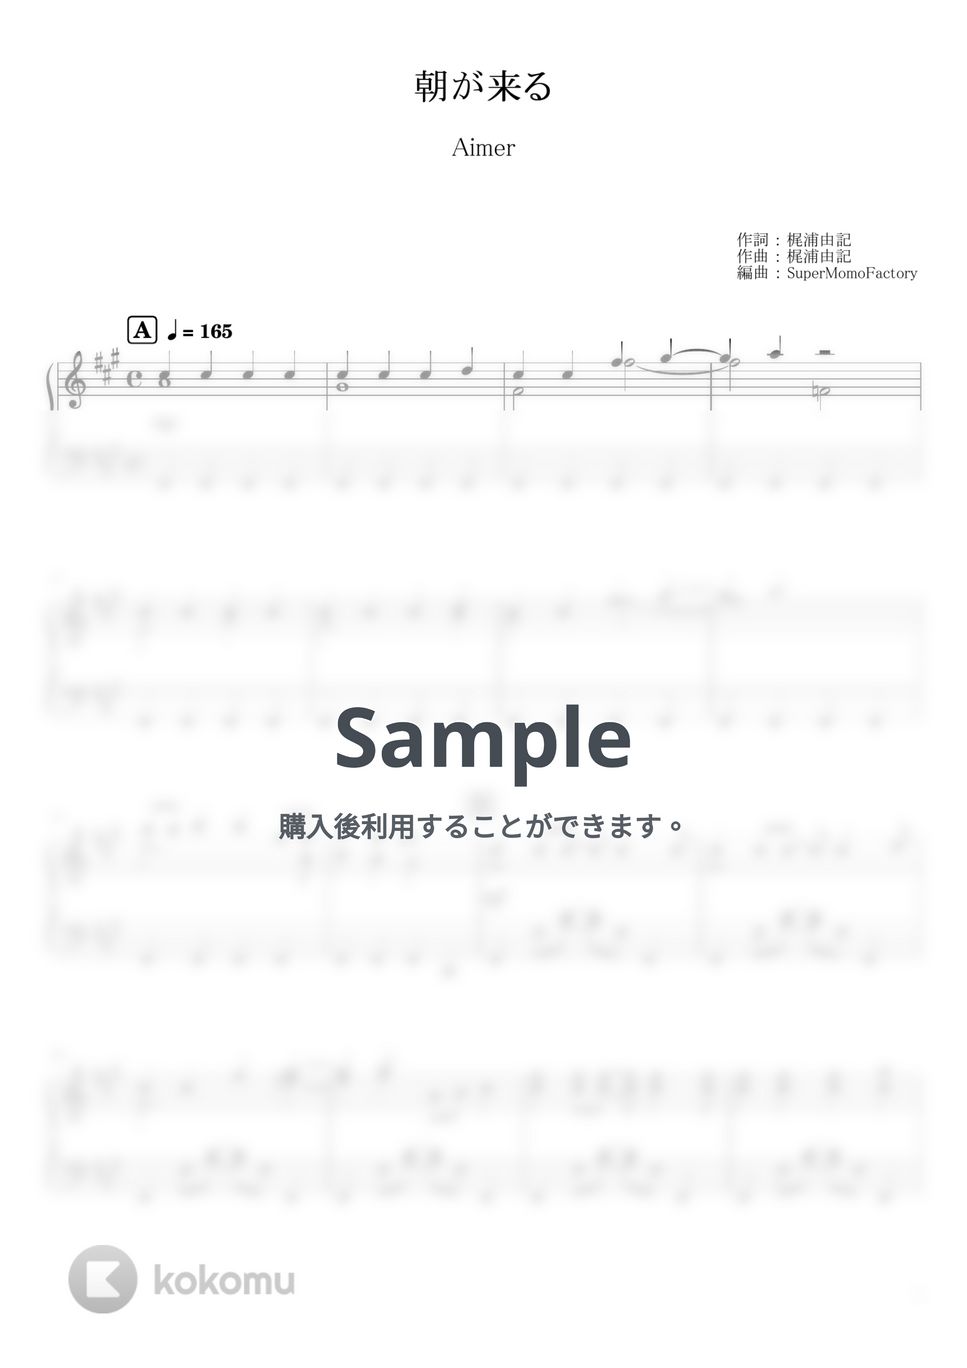 Aimer - 朝が来る (『鬼滅の刃 遊郭編』ED /ピアノソロ / 中級～上級) by SuperMomoFactory